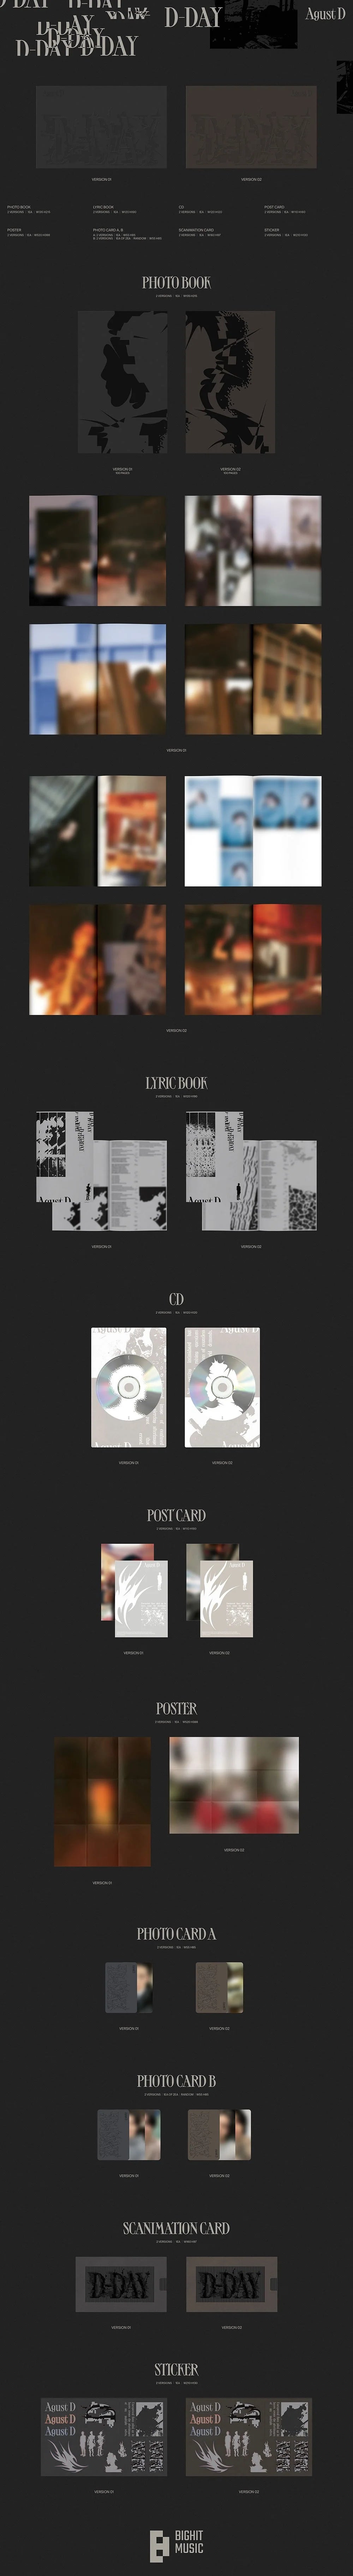 AUGUST D (BTS SUGA) - SOLO ALBUM D-DAY Infographic